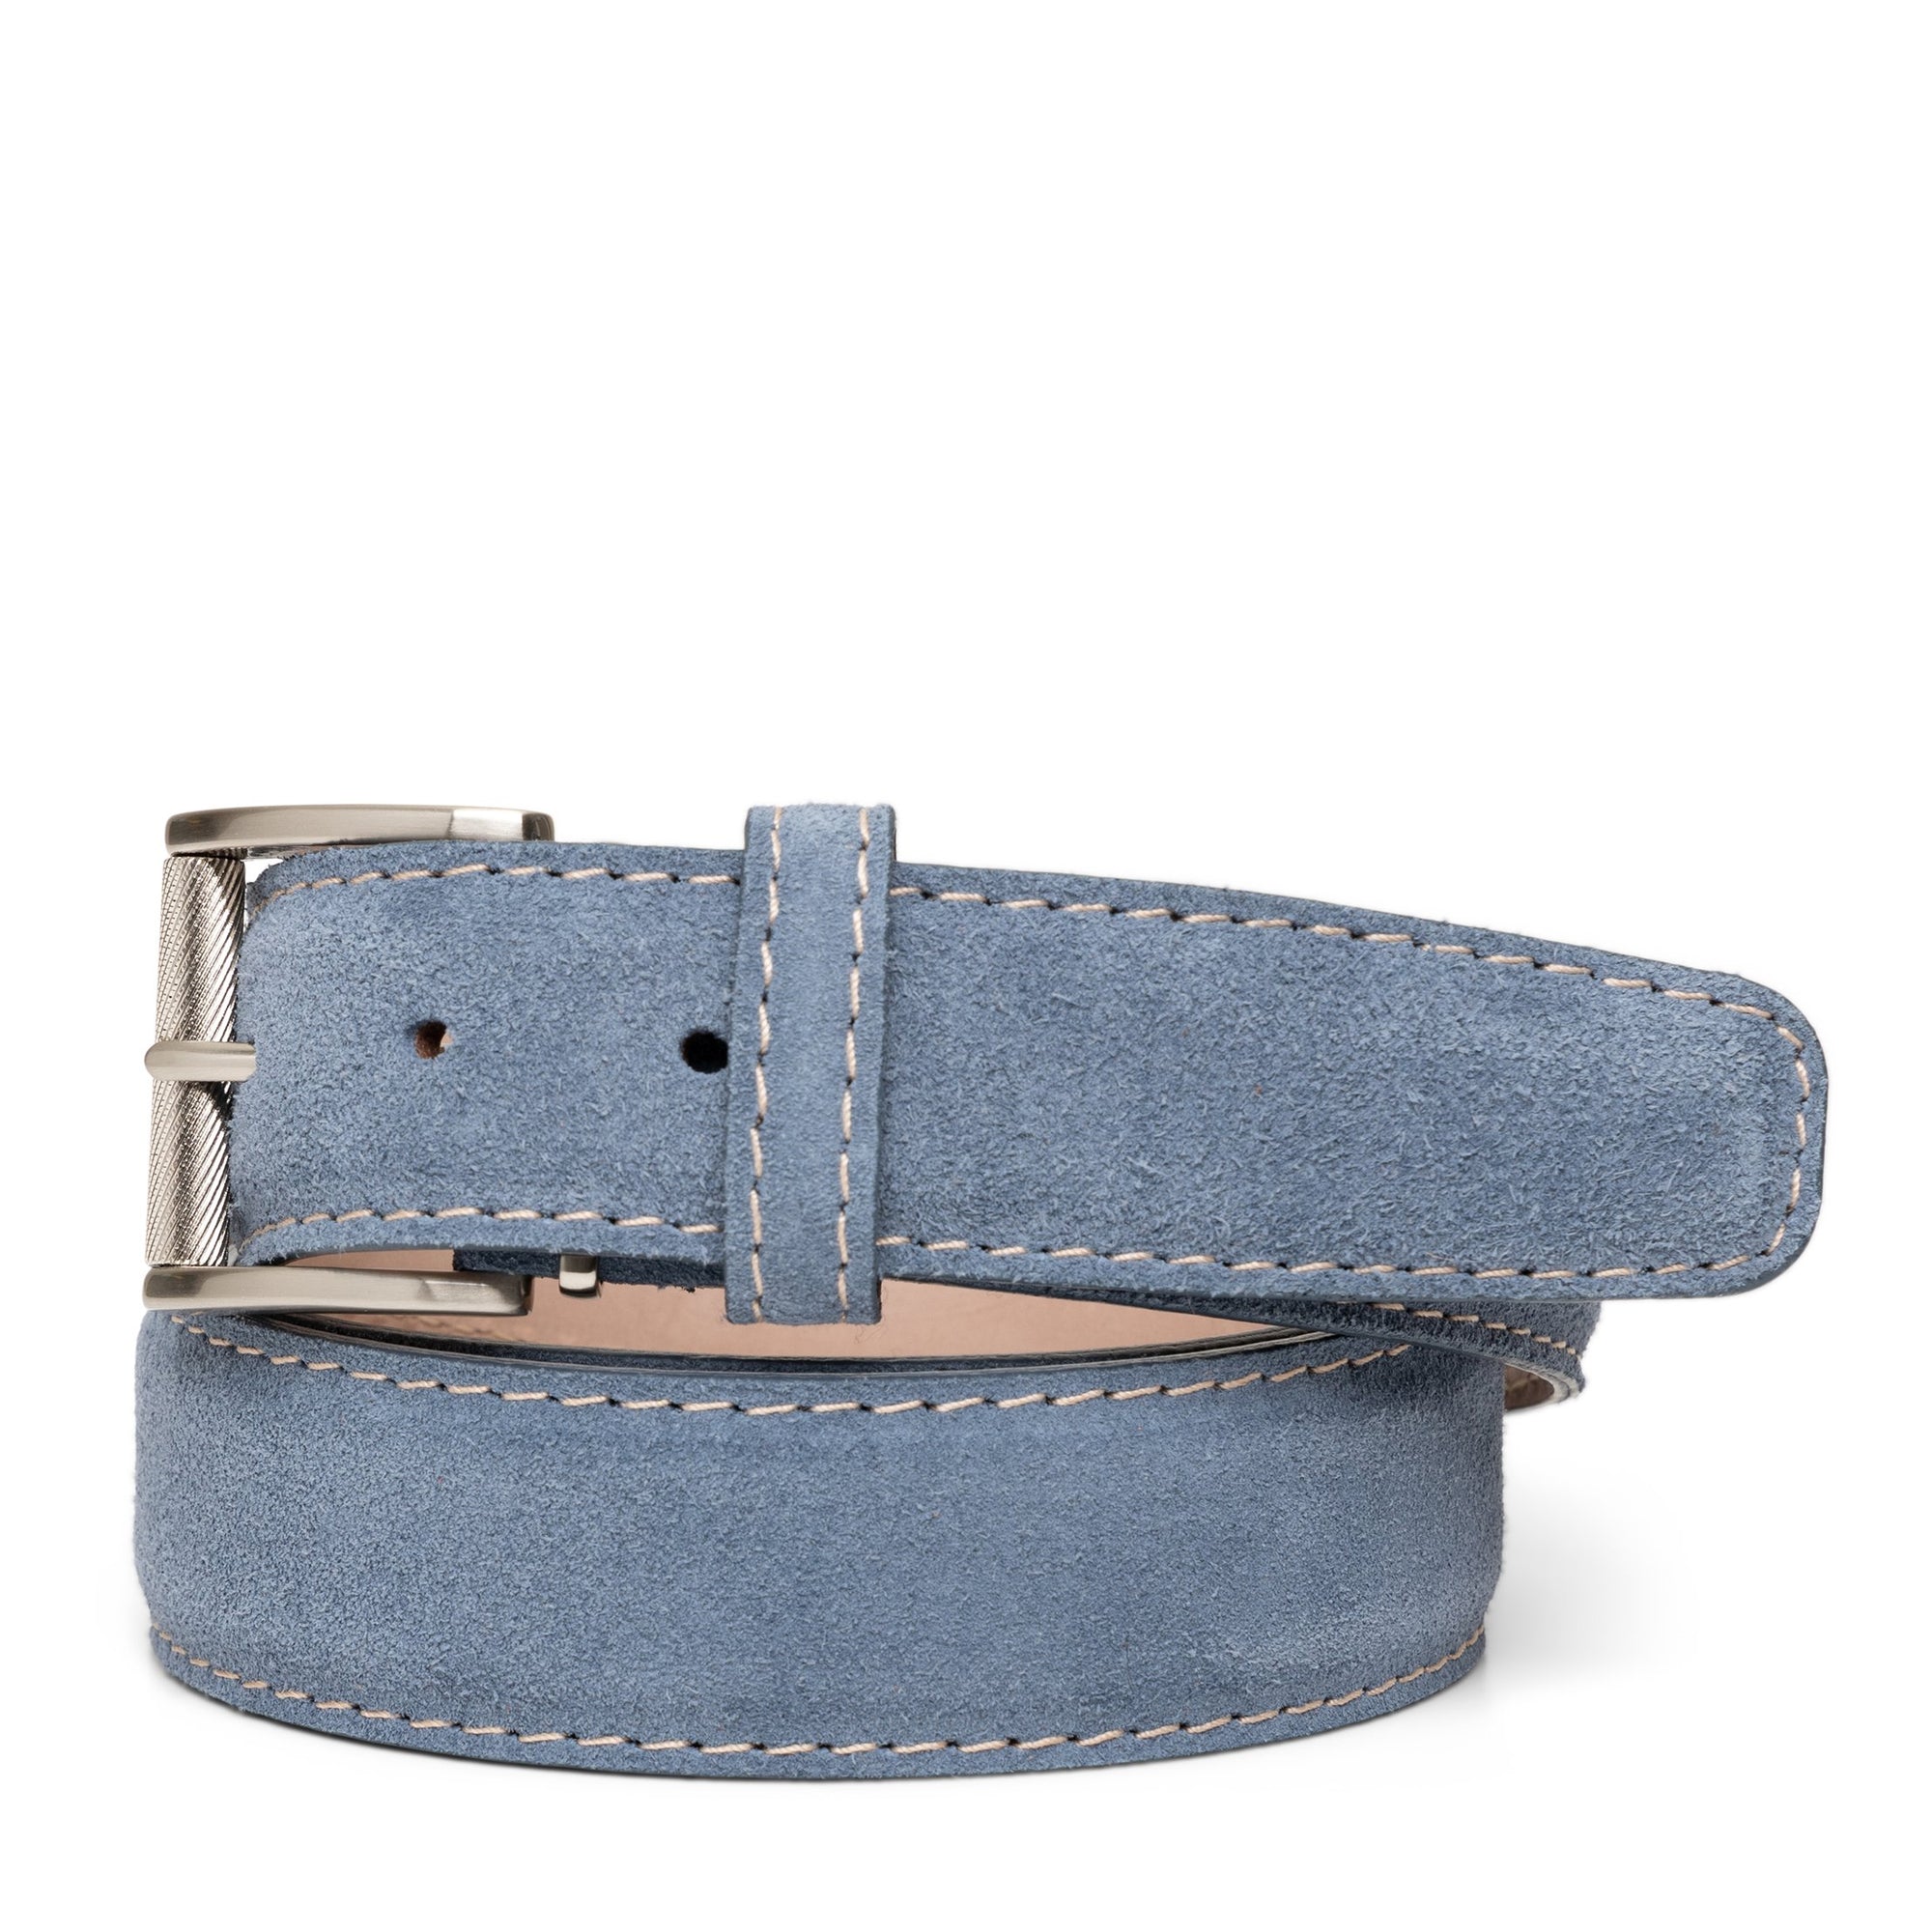 Italian Suede Belt in Denim Blue with Beige Stitching by L.E.N. Bespoke